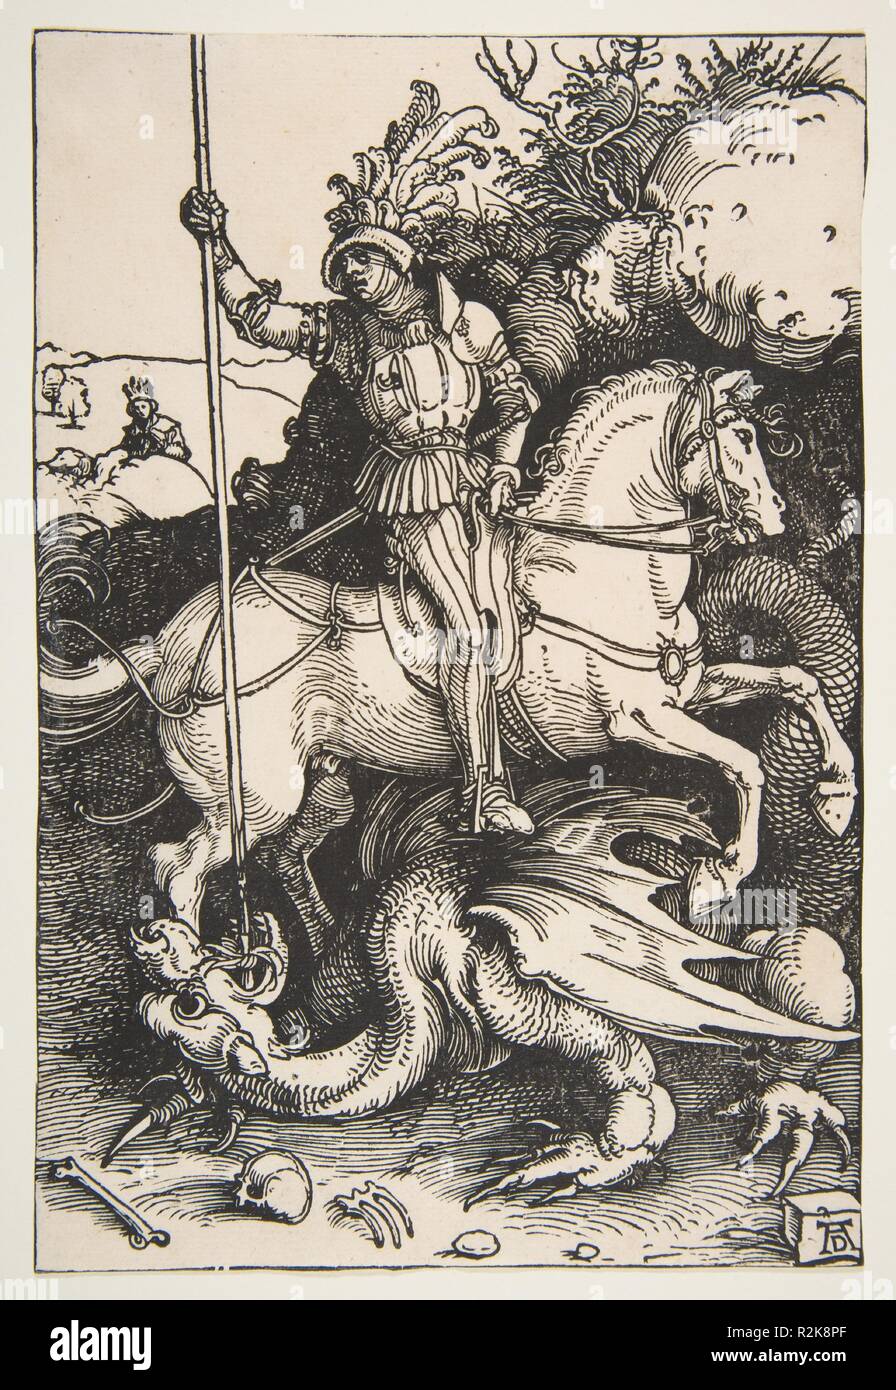 Saint George Slaying the Dragon. Artist: Albrecht Dürer (German, Nuremberg 1471-1528 Nuremberg). Dimensions: sheet: 8 5/16 x 5 9/16 in. (21.1 x 14.2 cm). Date: ca. 1504. Museum: Metropolitan Museum of Art, New York, USA. Stock Photo